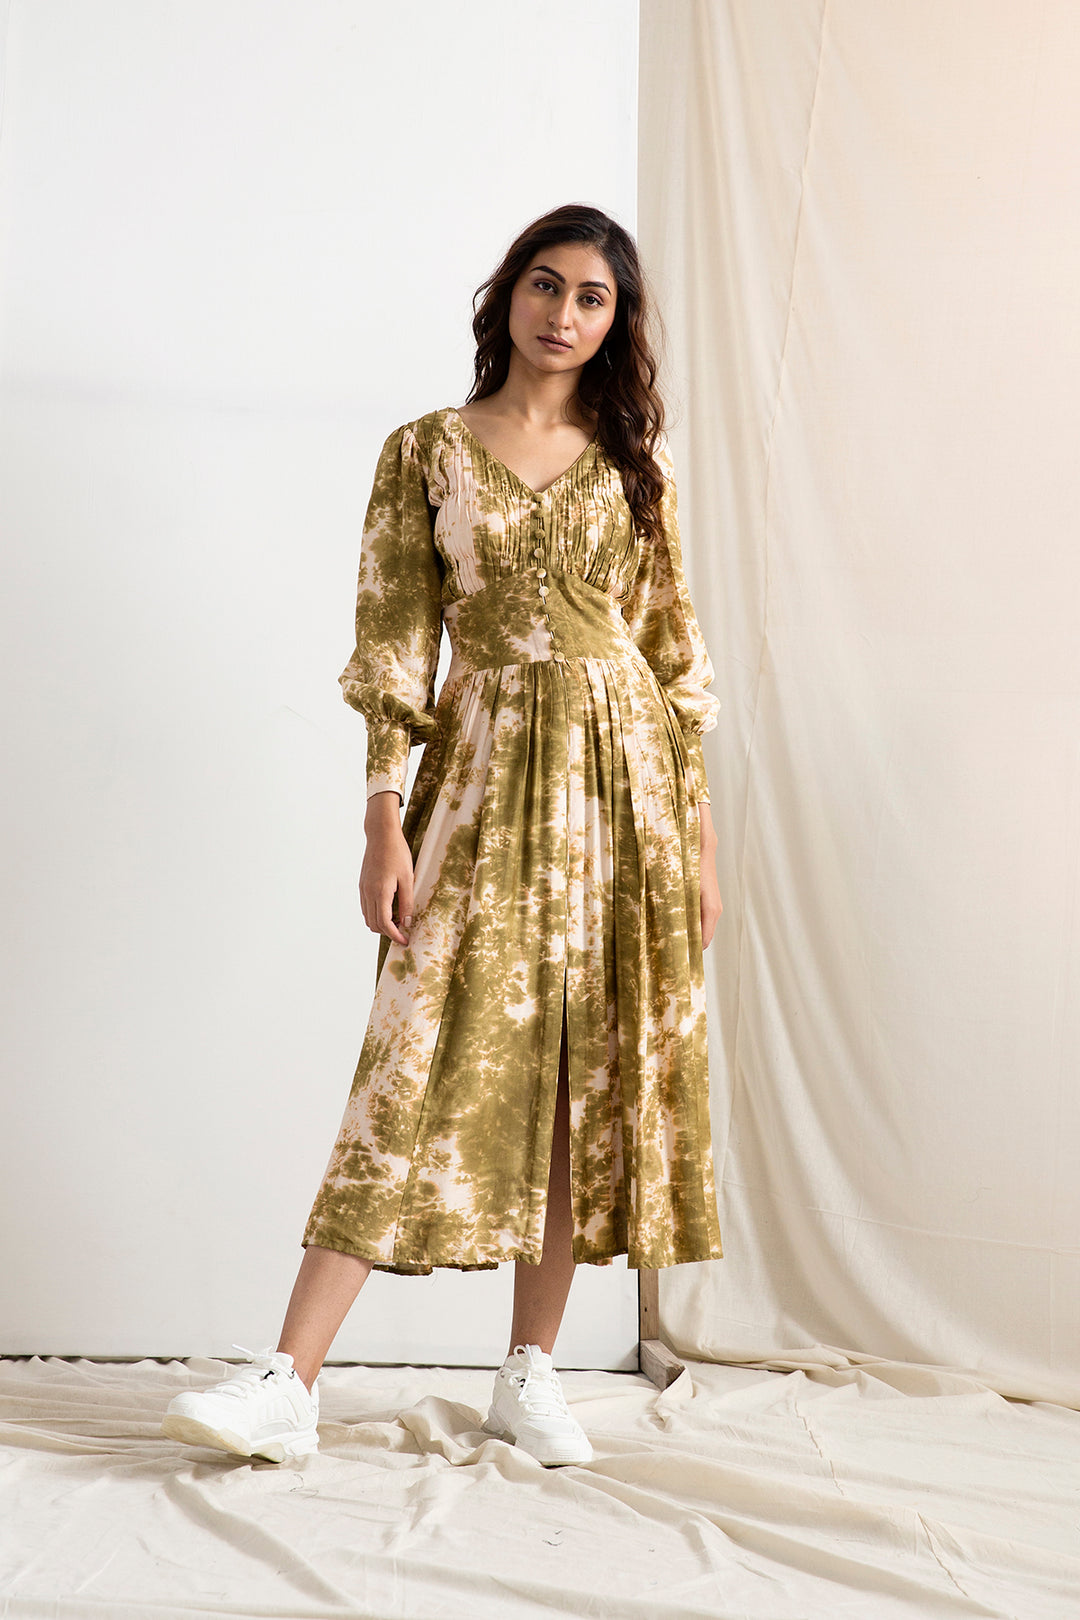 Lana - Tie & Dye Empire Dress